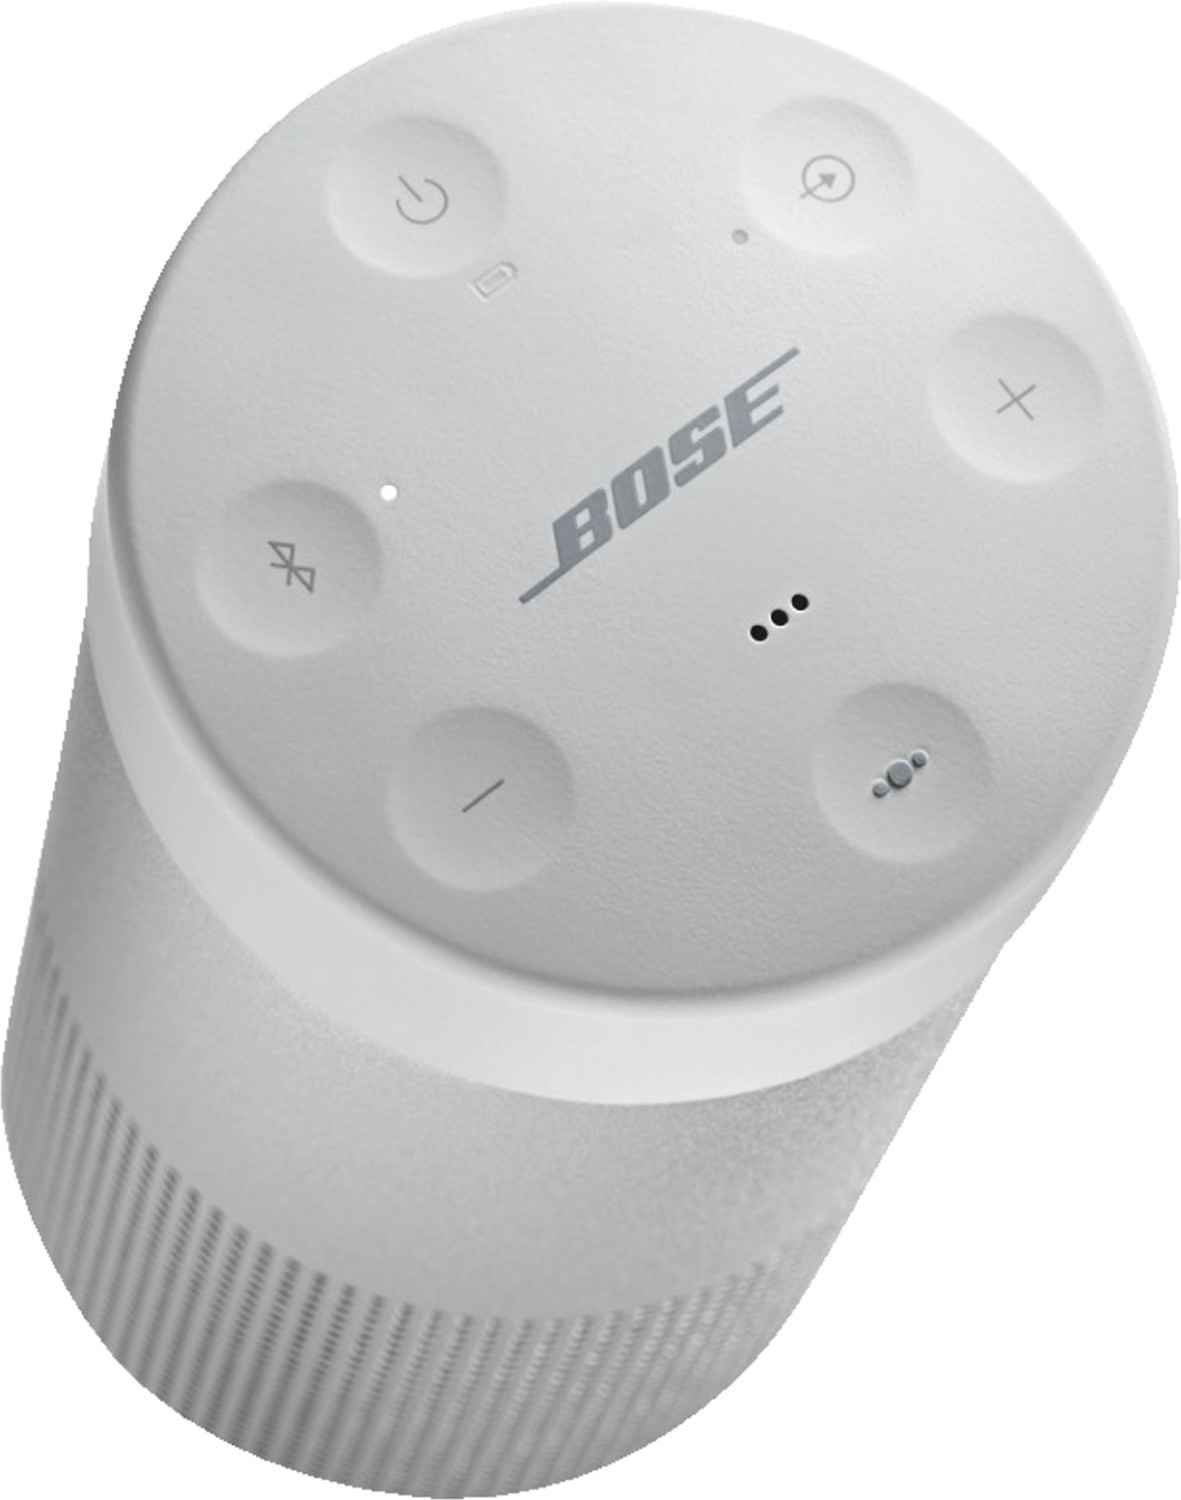 Buy Bose SoundLink Revolve Grey from £149.99 (Today) – Best Deals on